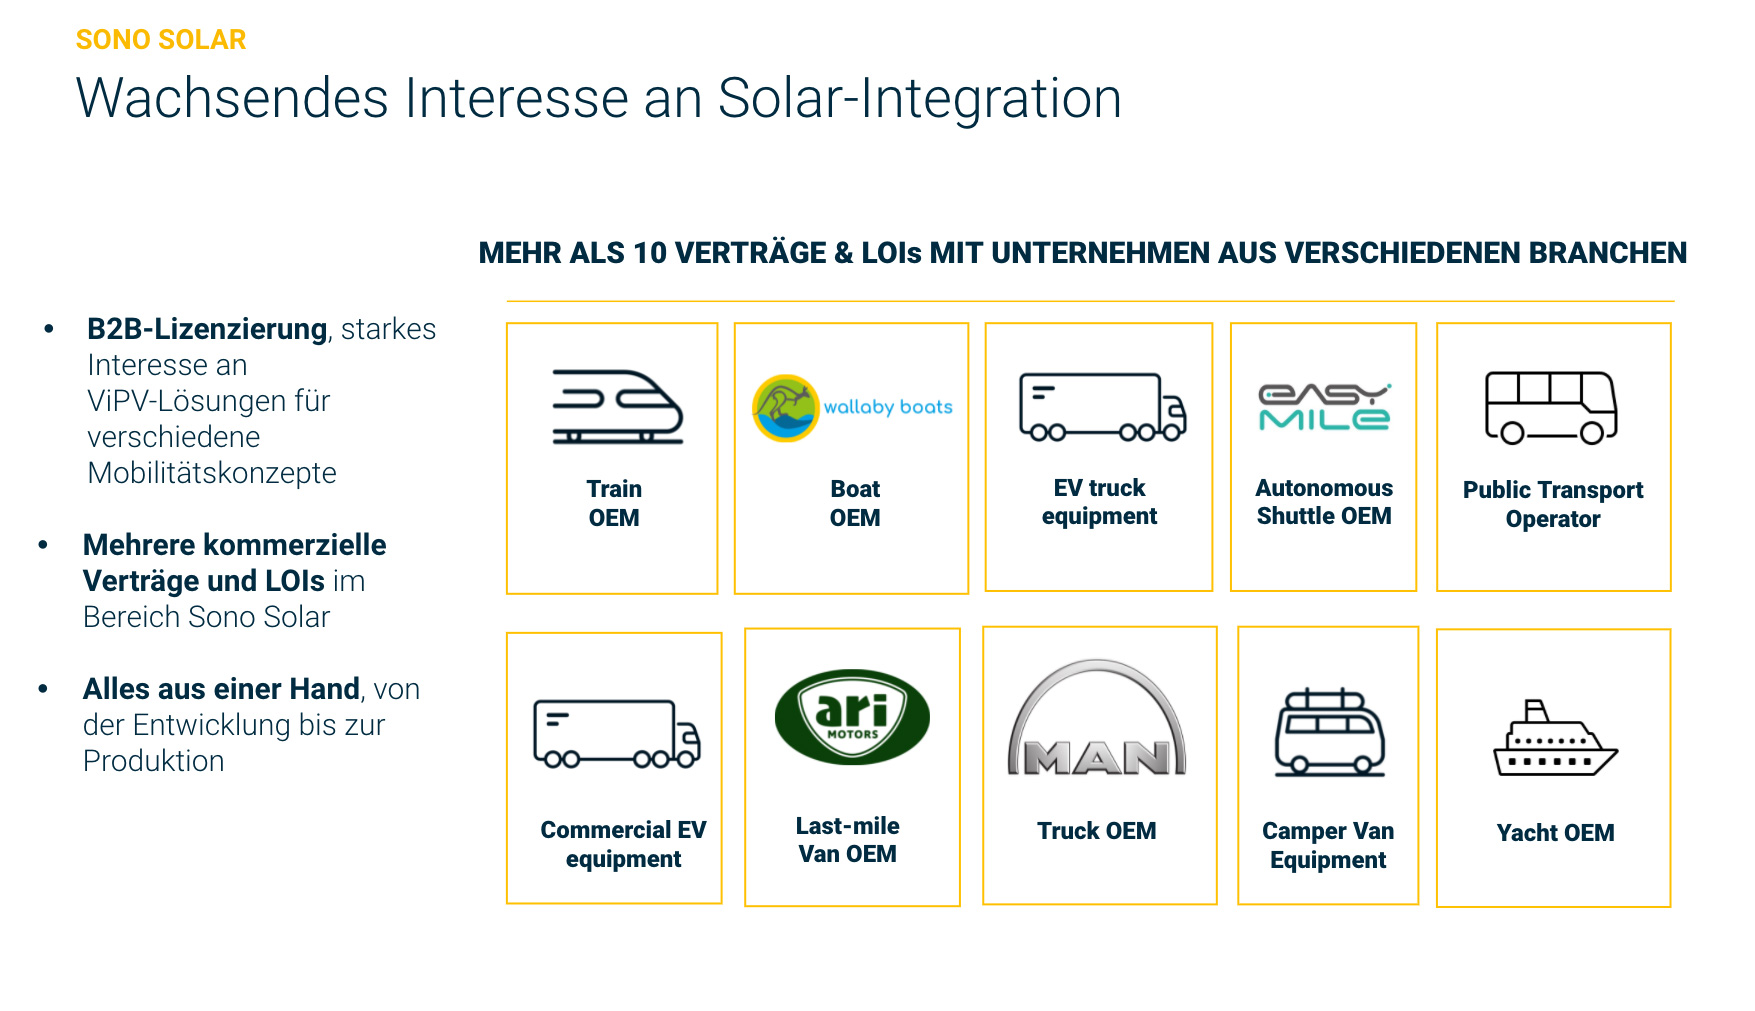 Wachsendes Interesse an Solar-Integration